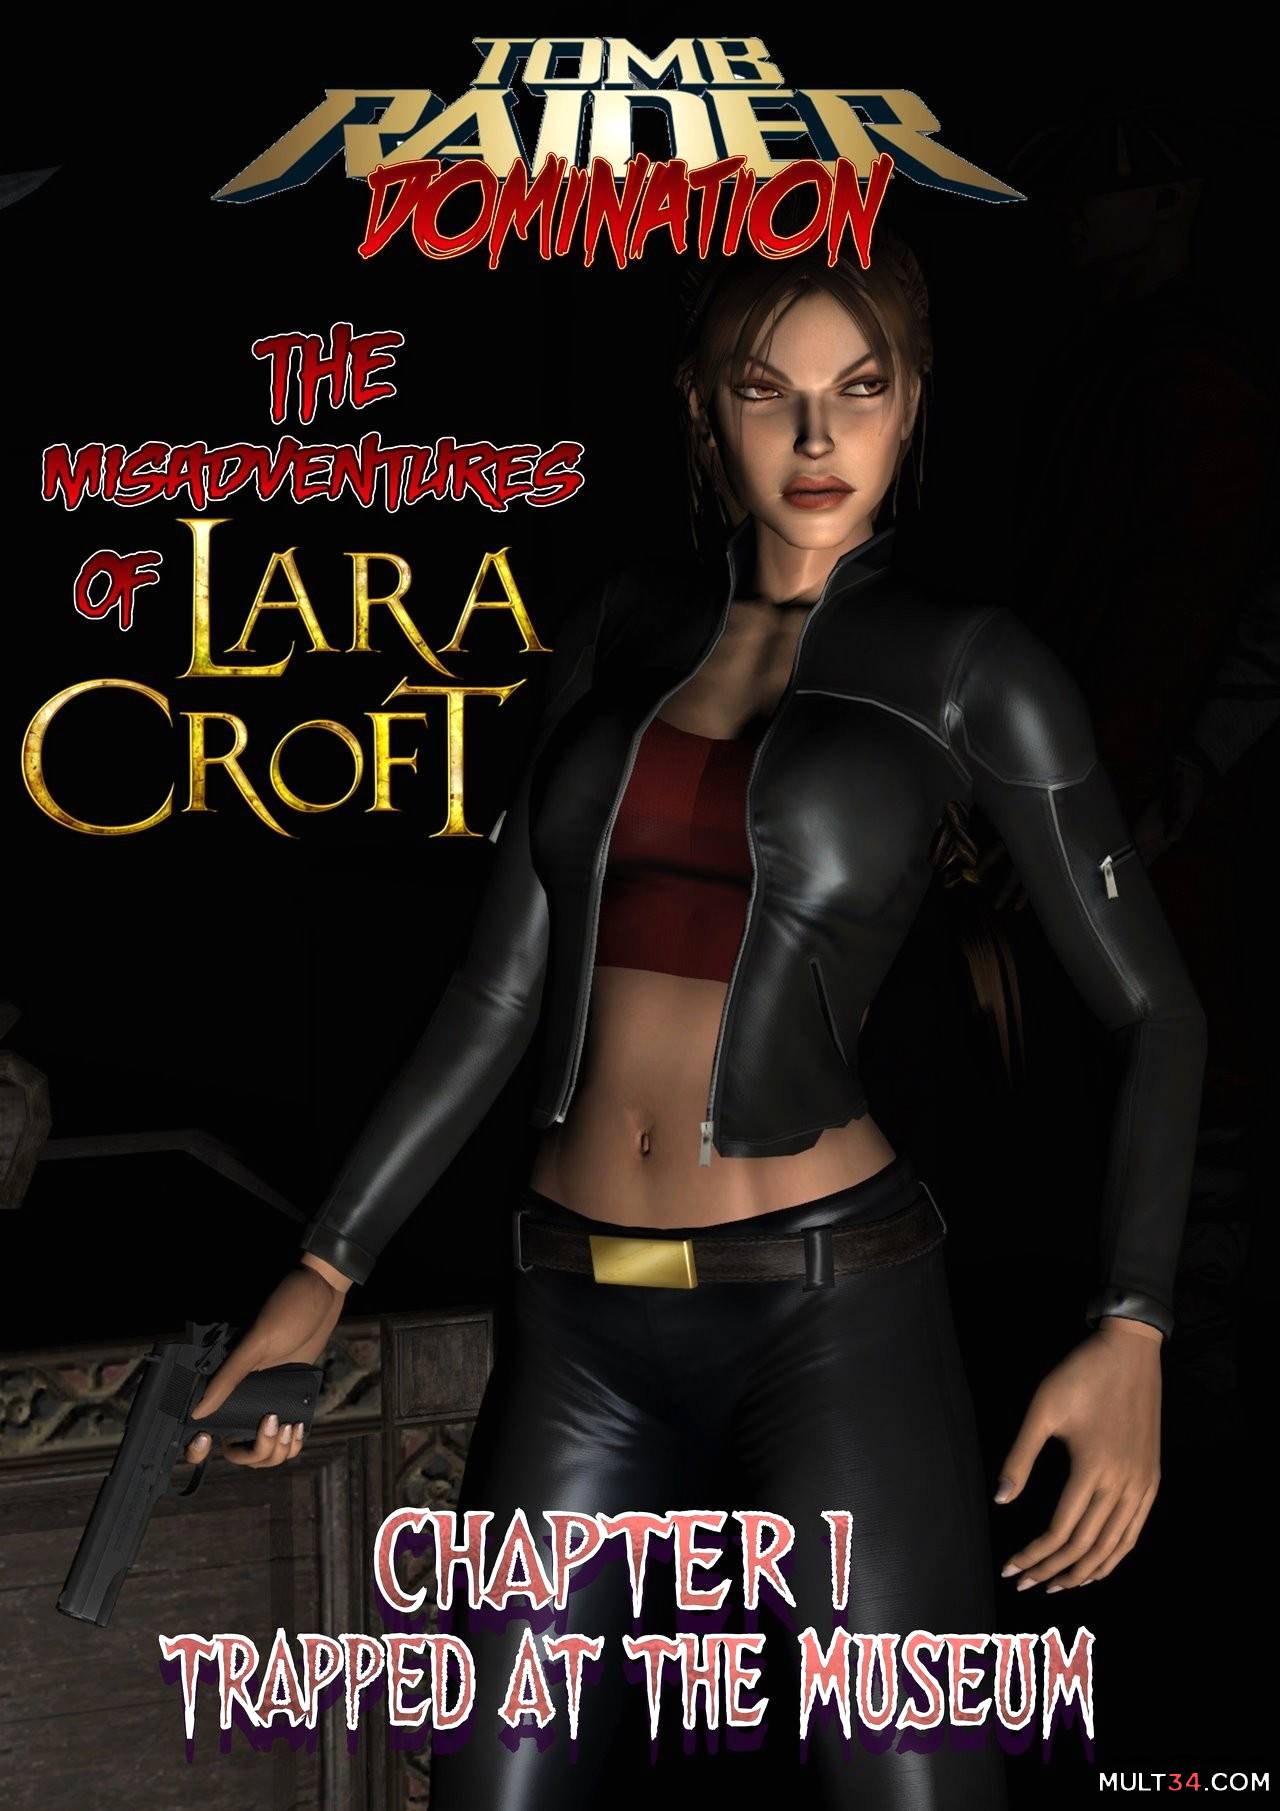 Tomb Raider Domination -The Misadventures of Lara Croft - chapter 1 porn  comic - the best cartoon porn comics, Rule 34 | MULT34